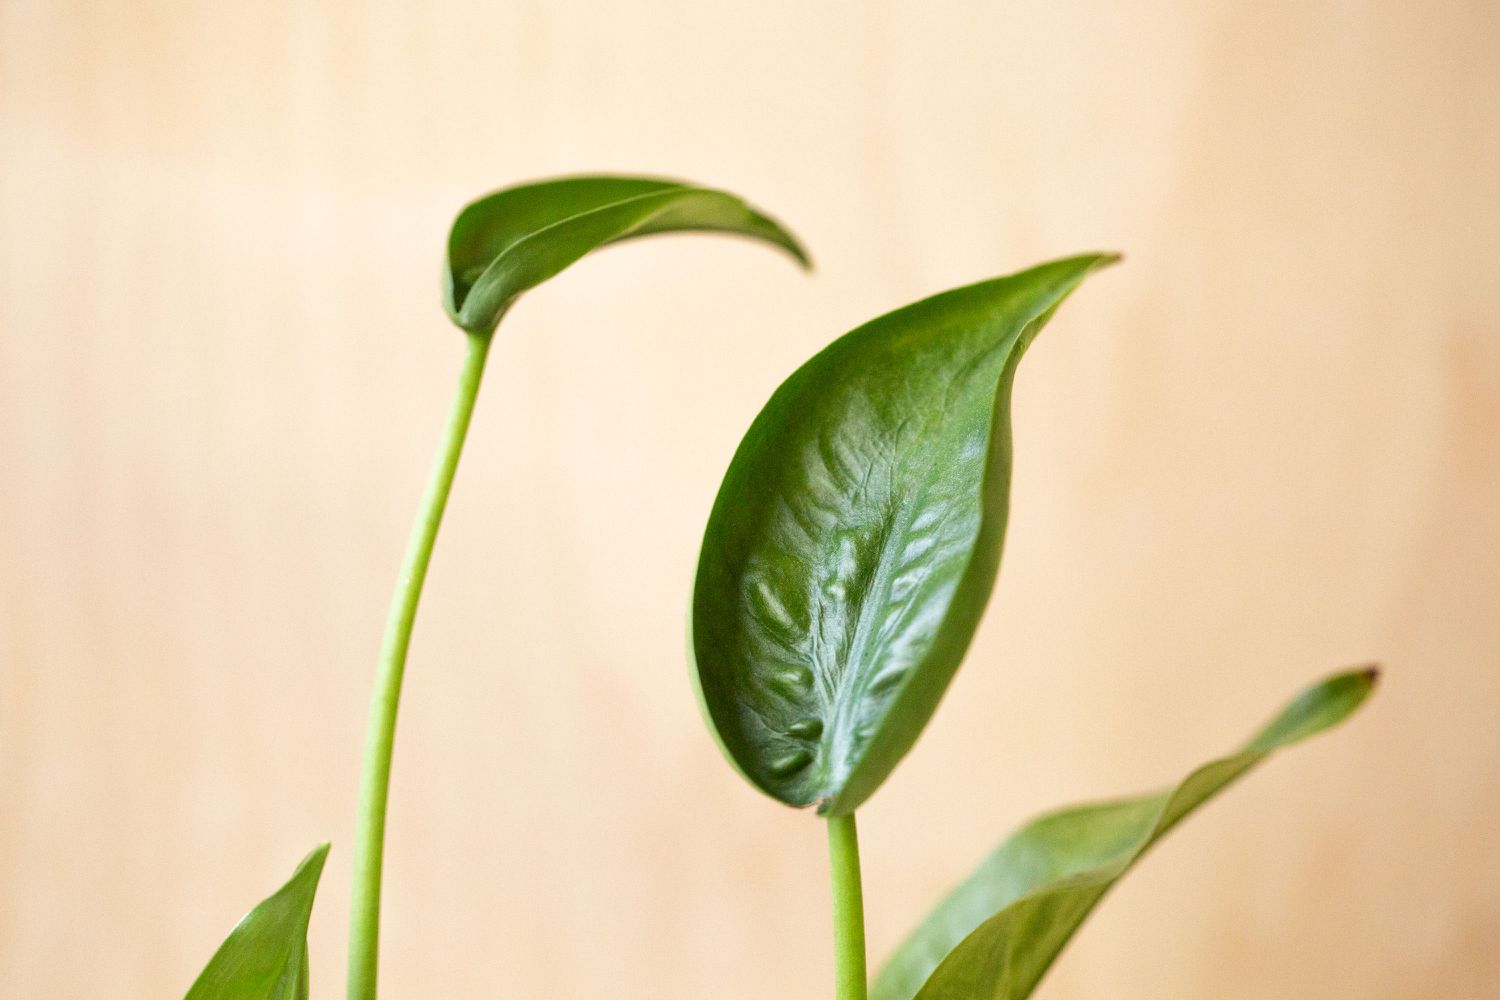 Alocasia planta bailarina diminuta tallos con hojas puntiagudas de color verde oscuro en tallos delgados